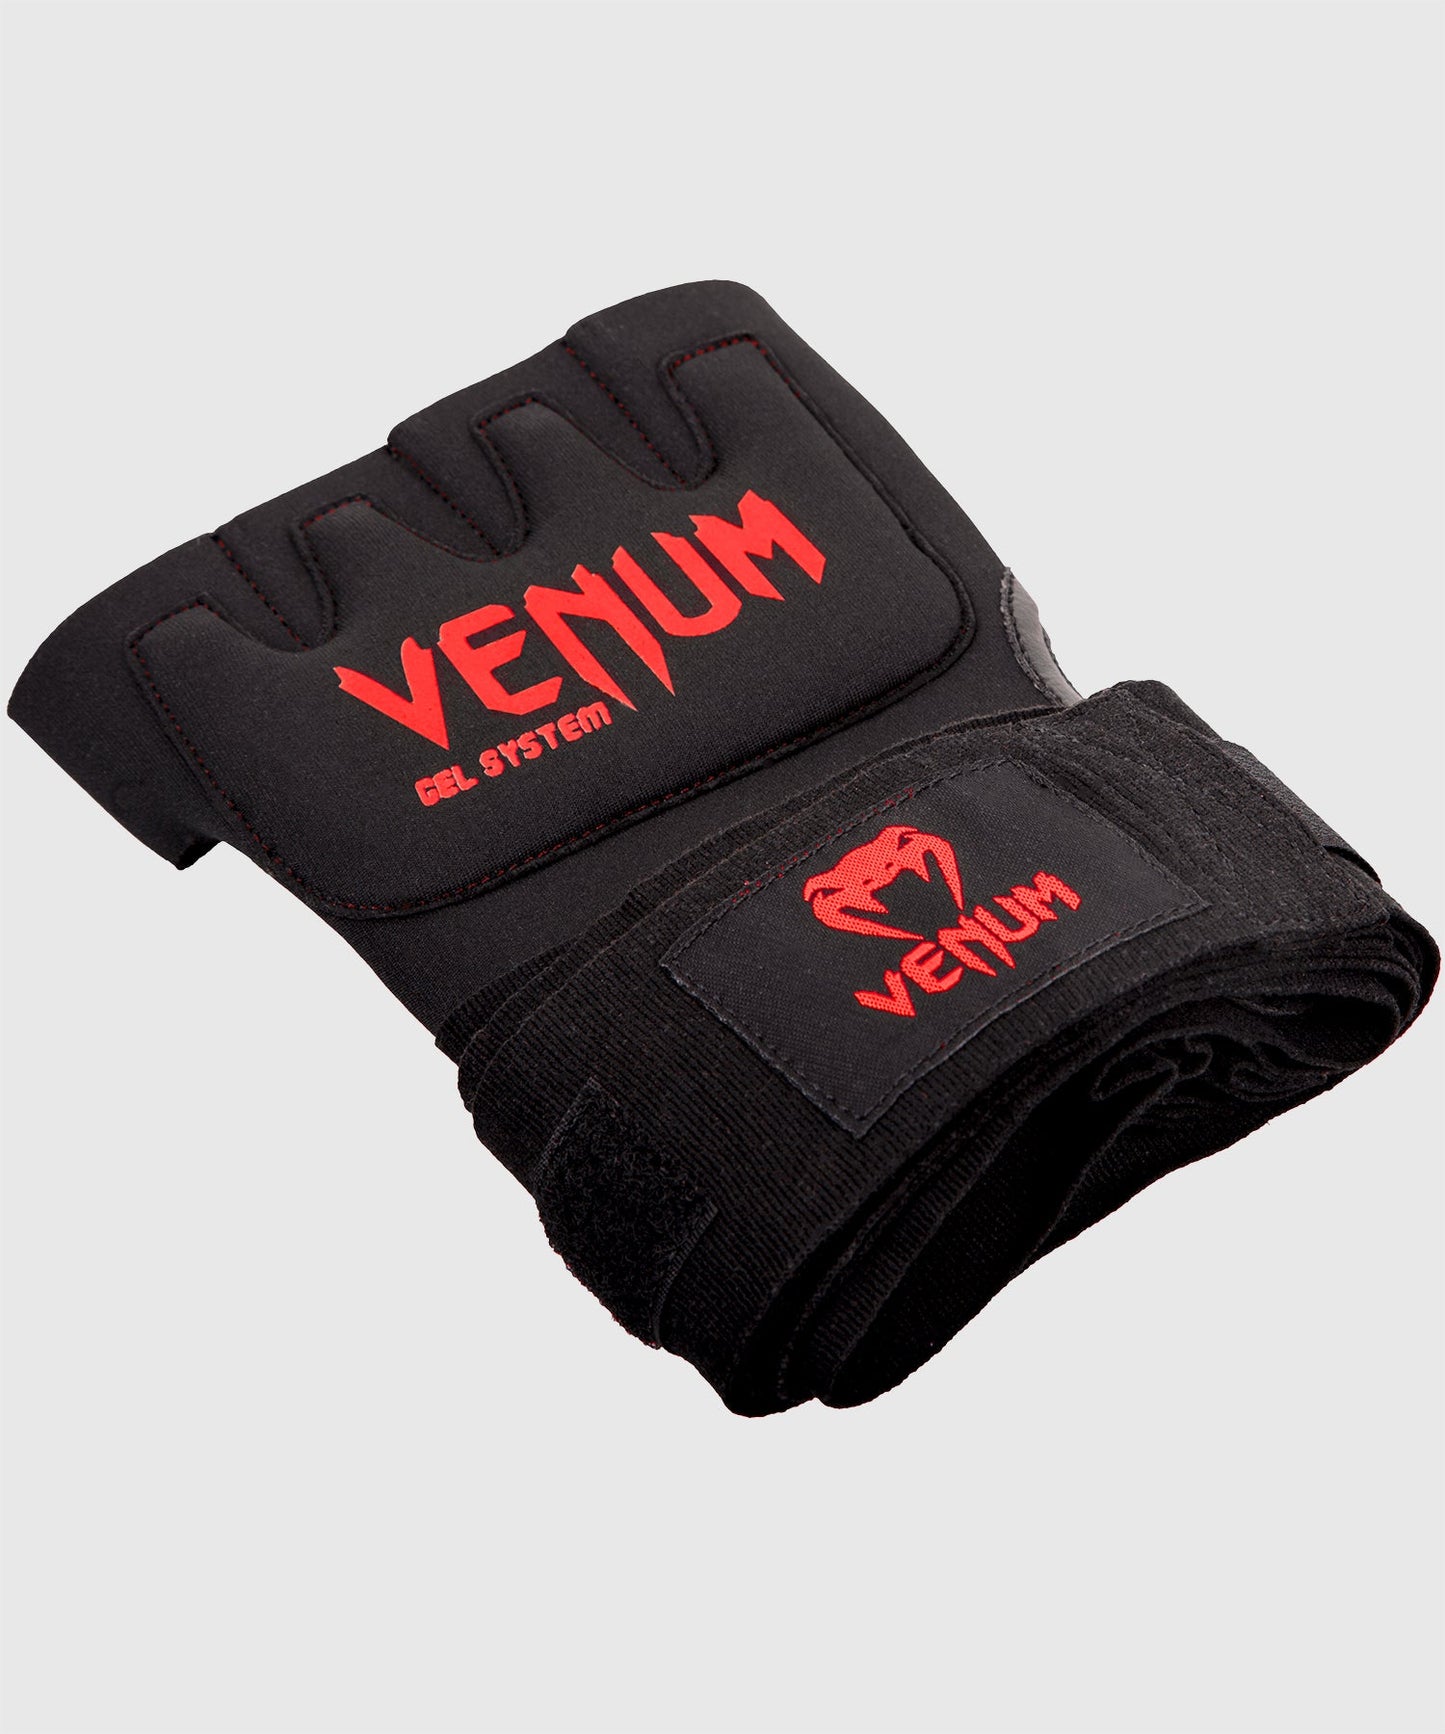 Venum Gel Kontact Quick Wraps - Black/Red